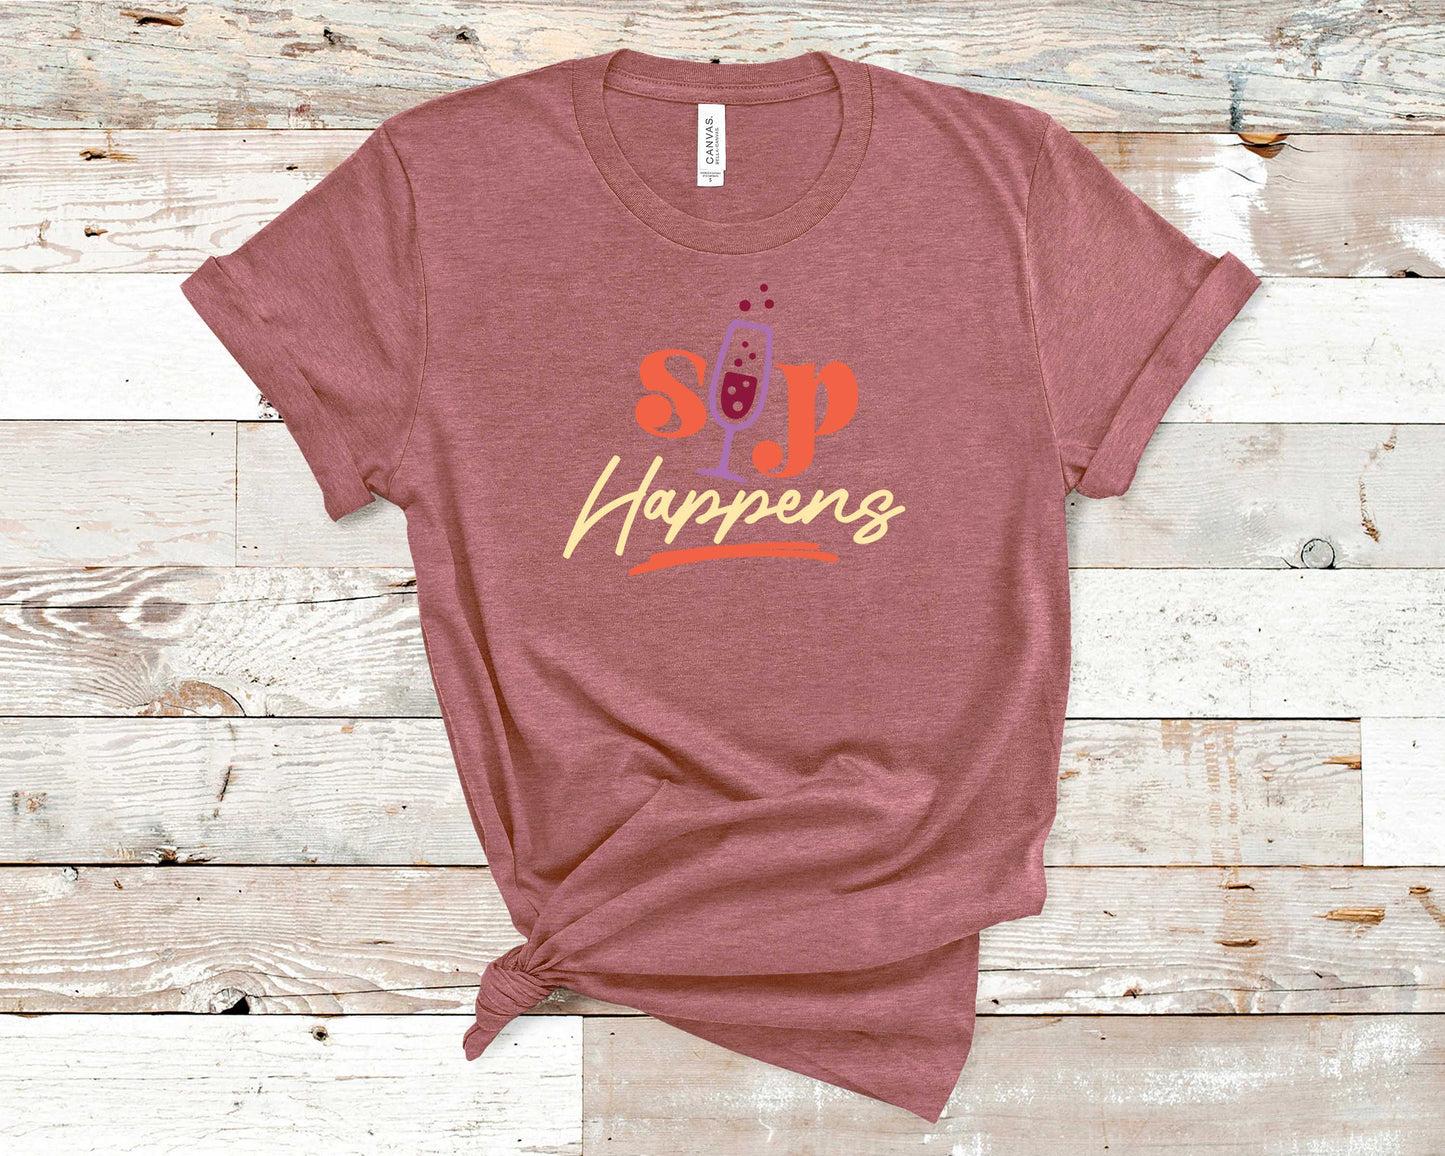 Sip Happens - Wine Lovers